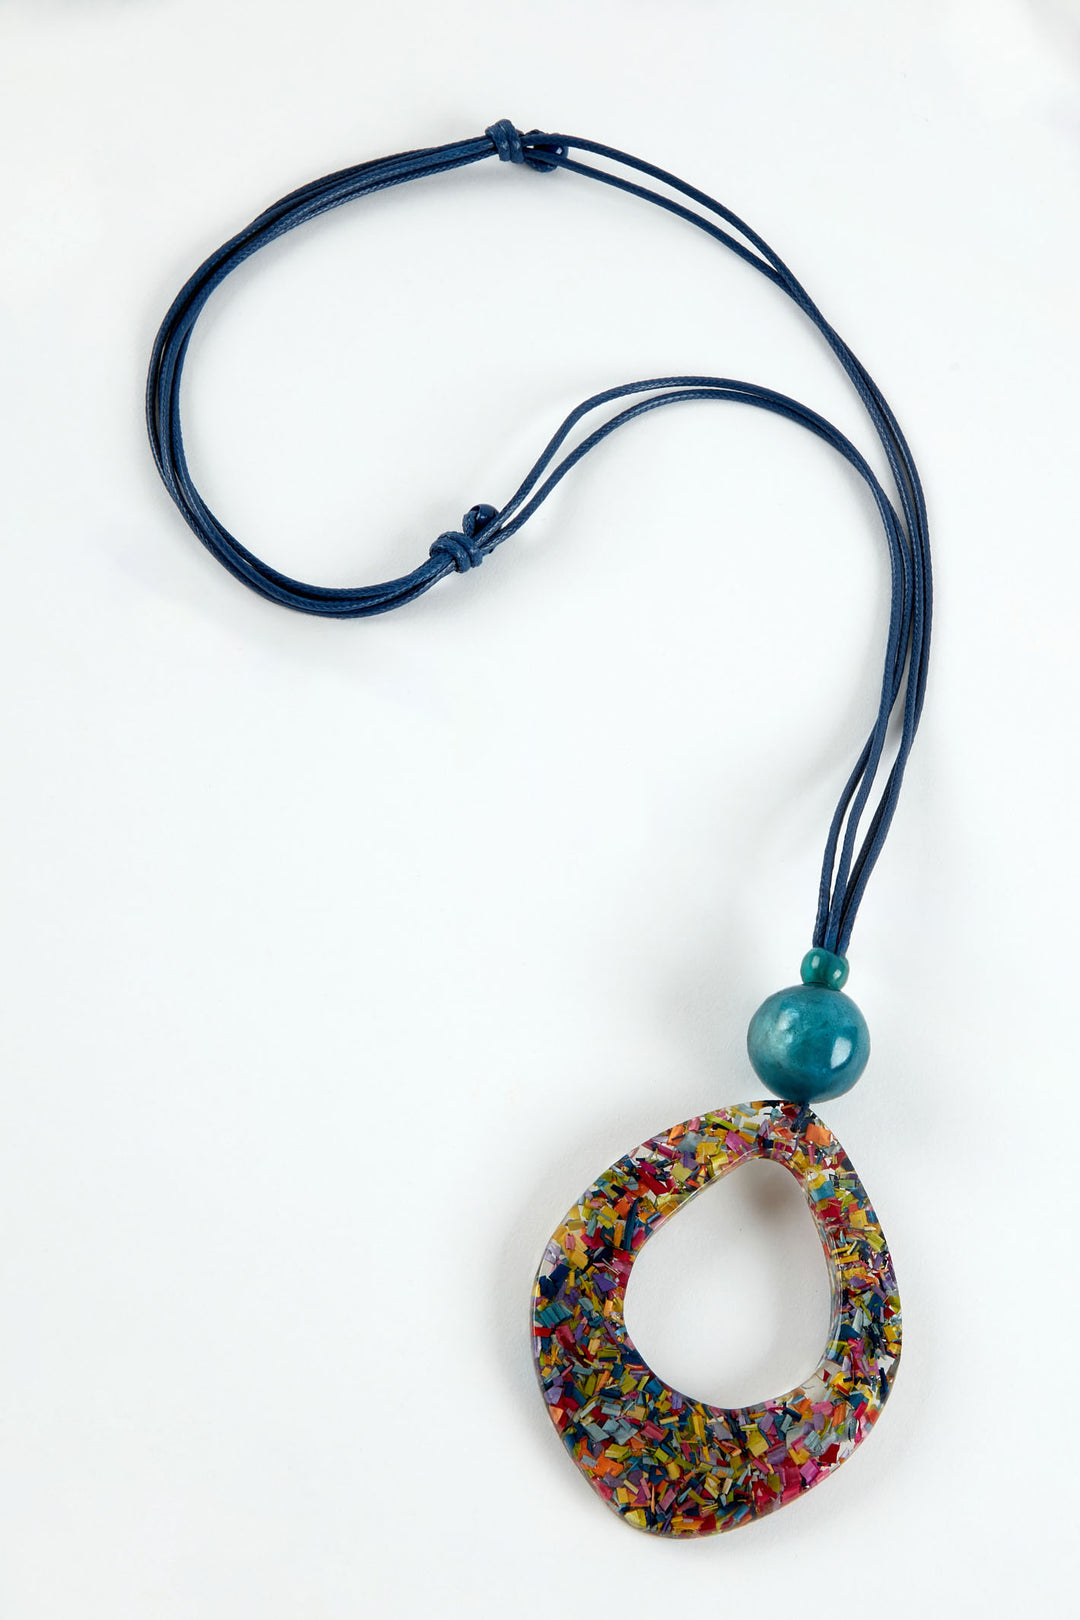 Dante NL70714 Multi-Coloured Art Necklace - Experience Boutique